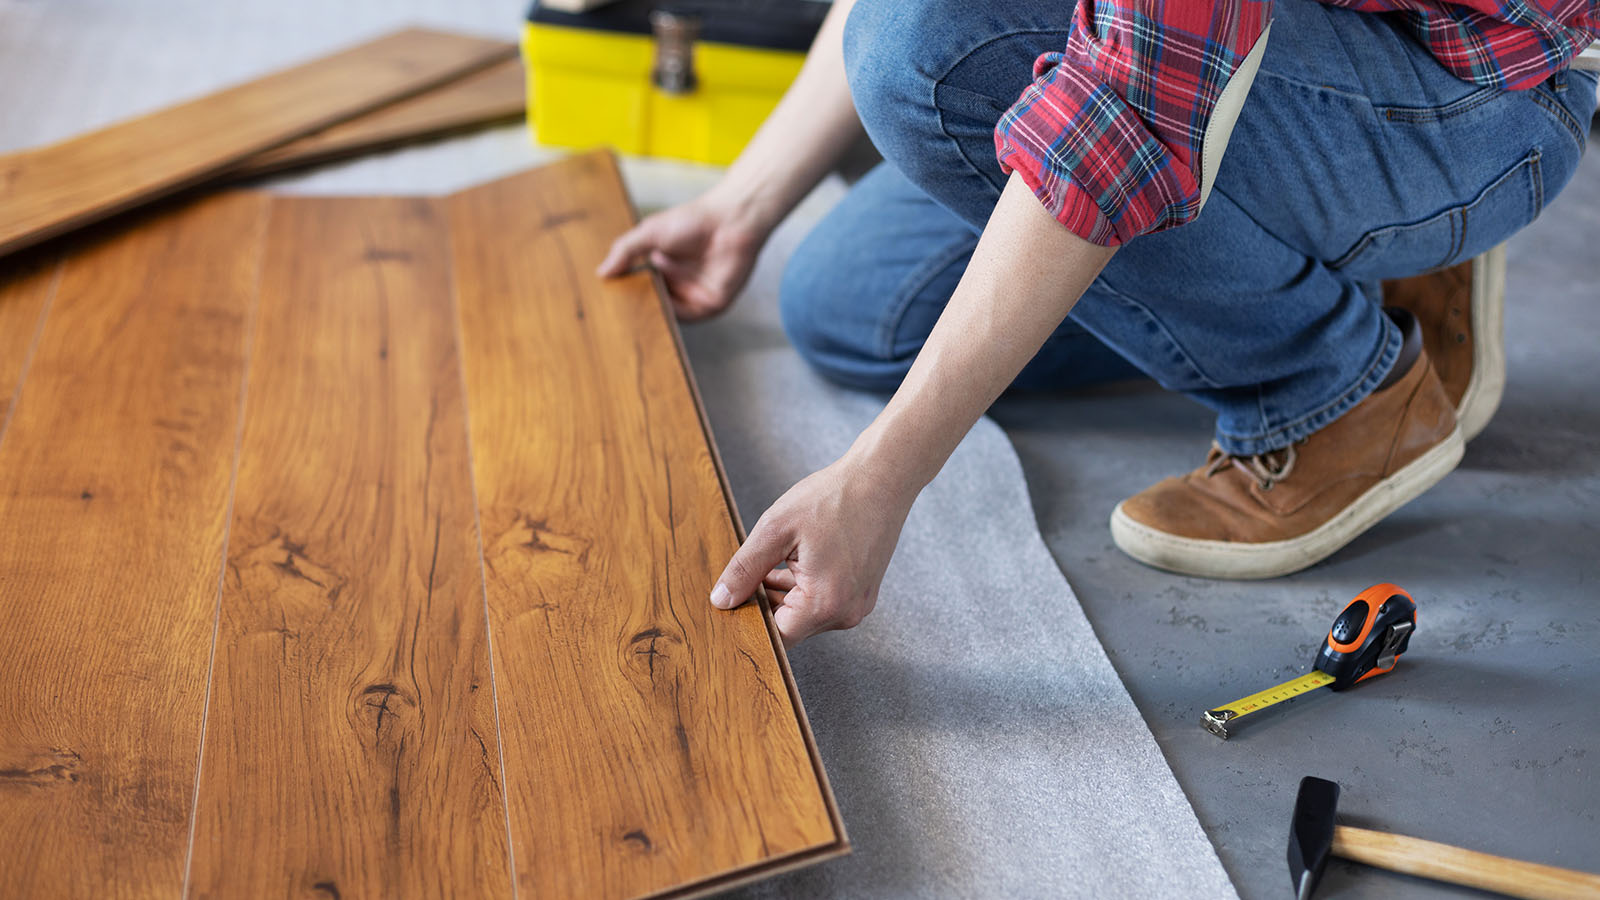 wood flooring options